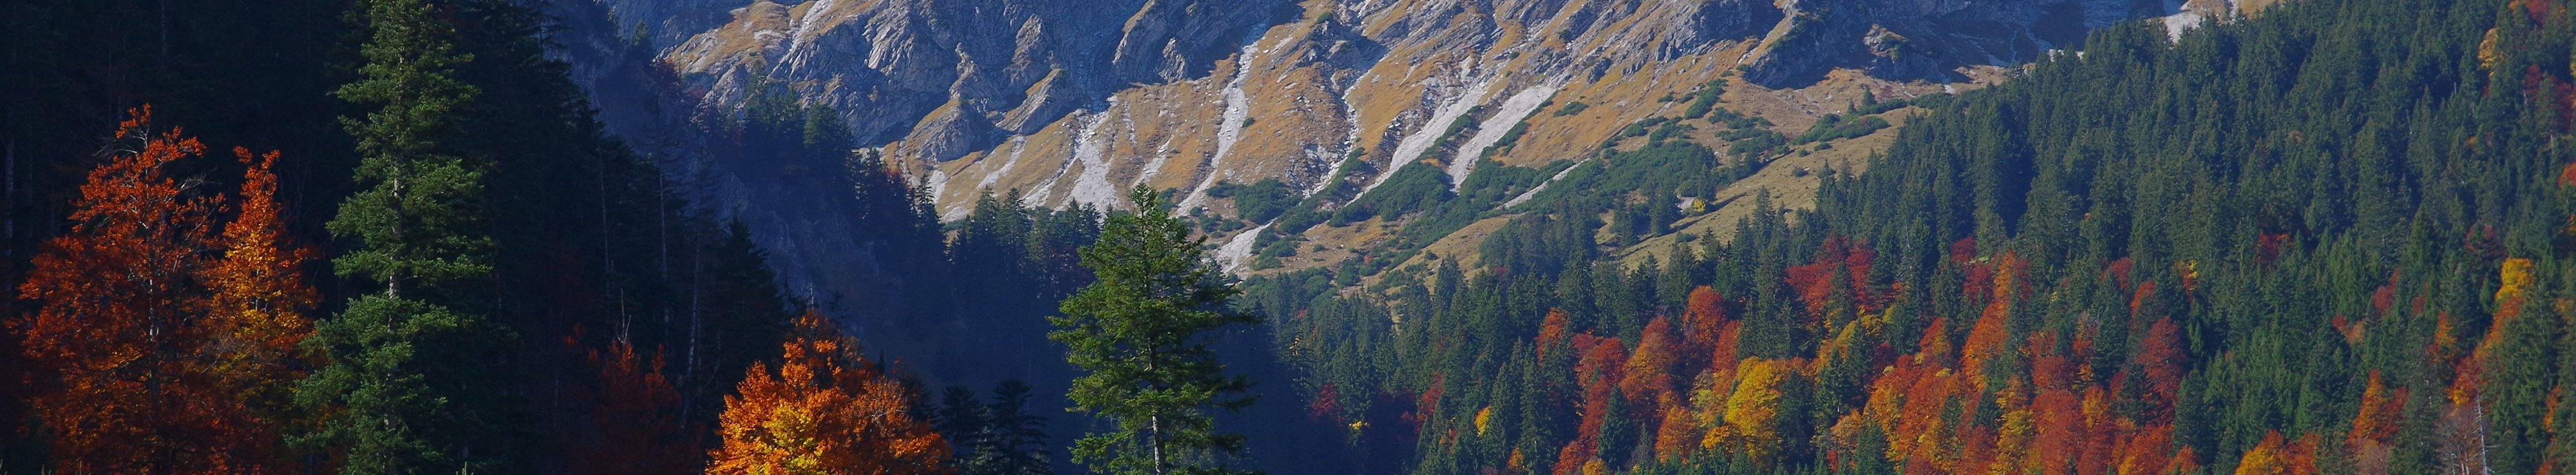 Blick in einen Berghang mit Wald in den unteren Regionen